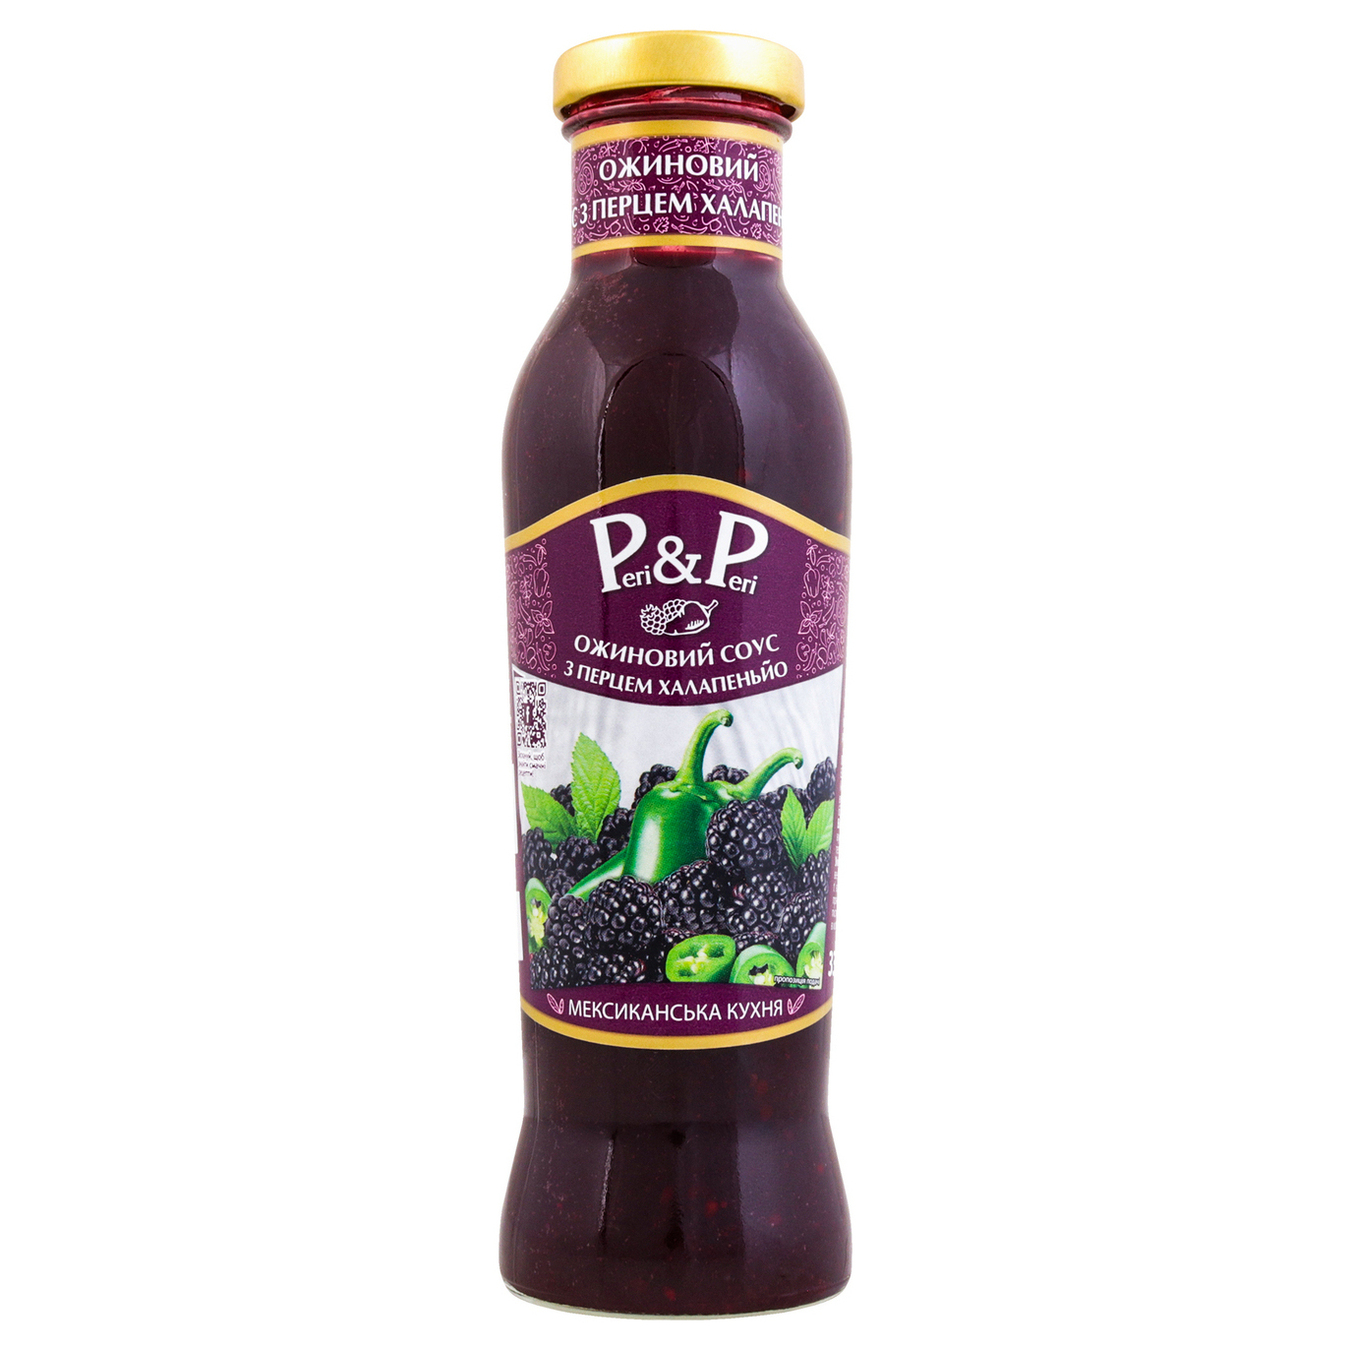 Peri&Peri Blackberry sauce with jalapeño pepper pasteurized 330g